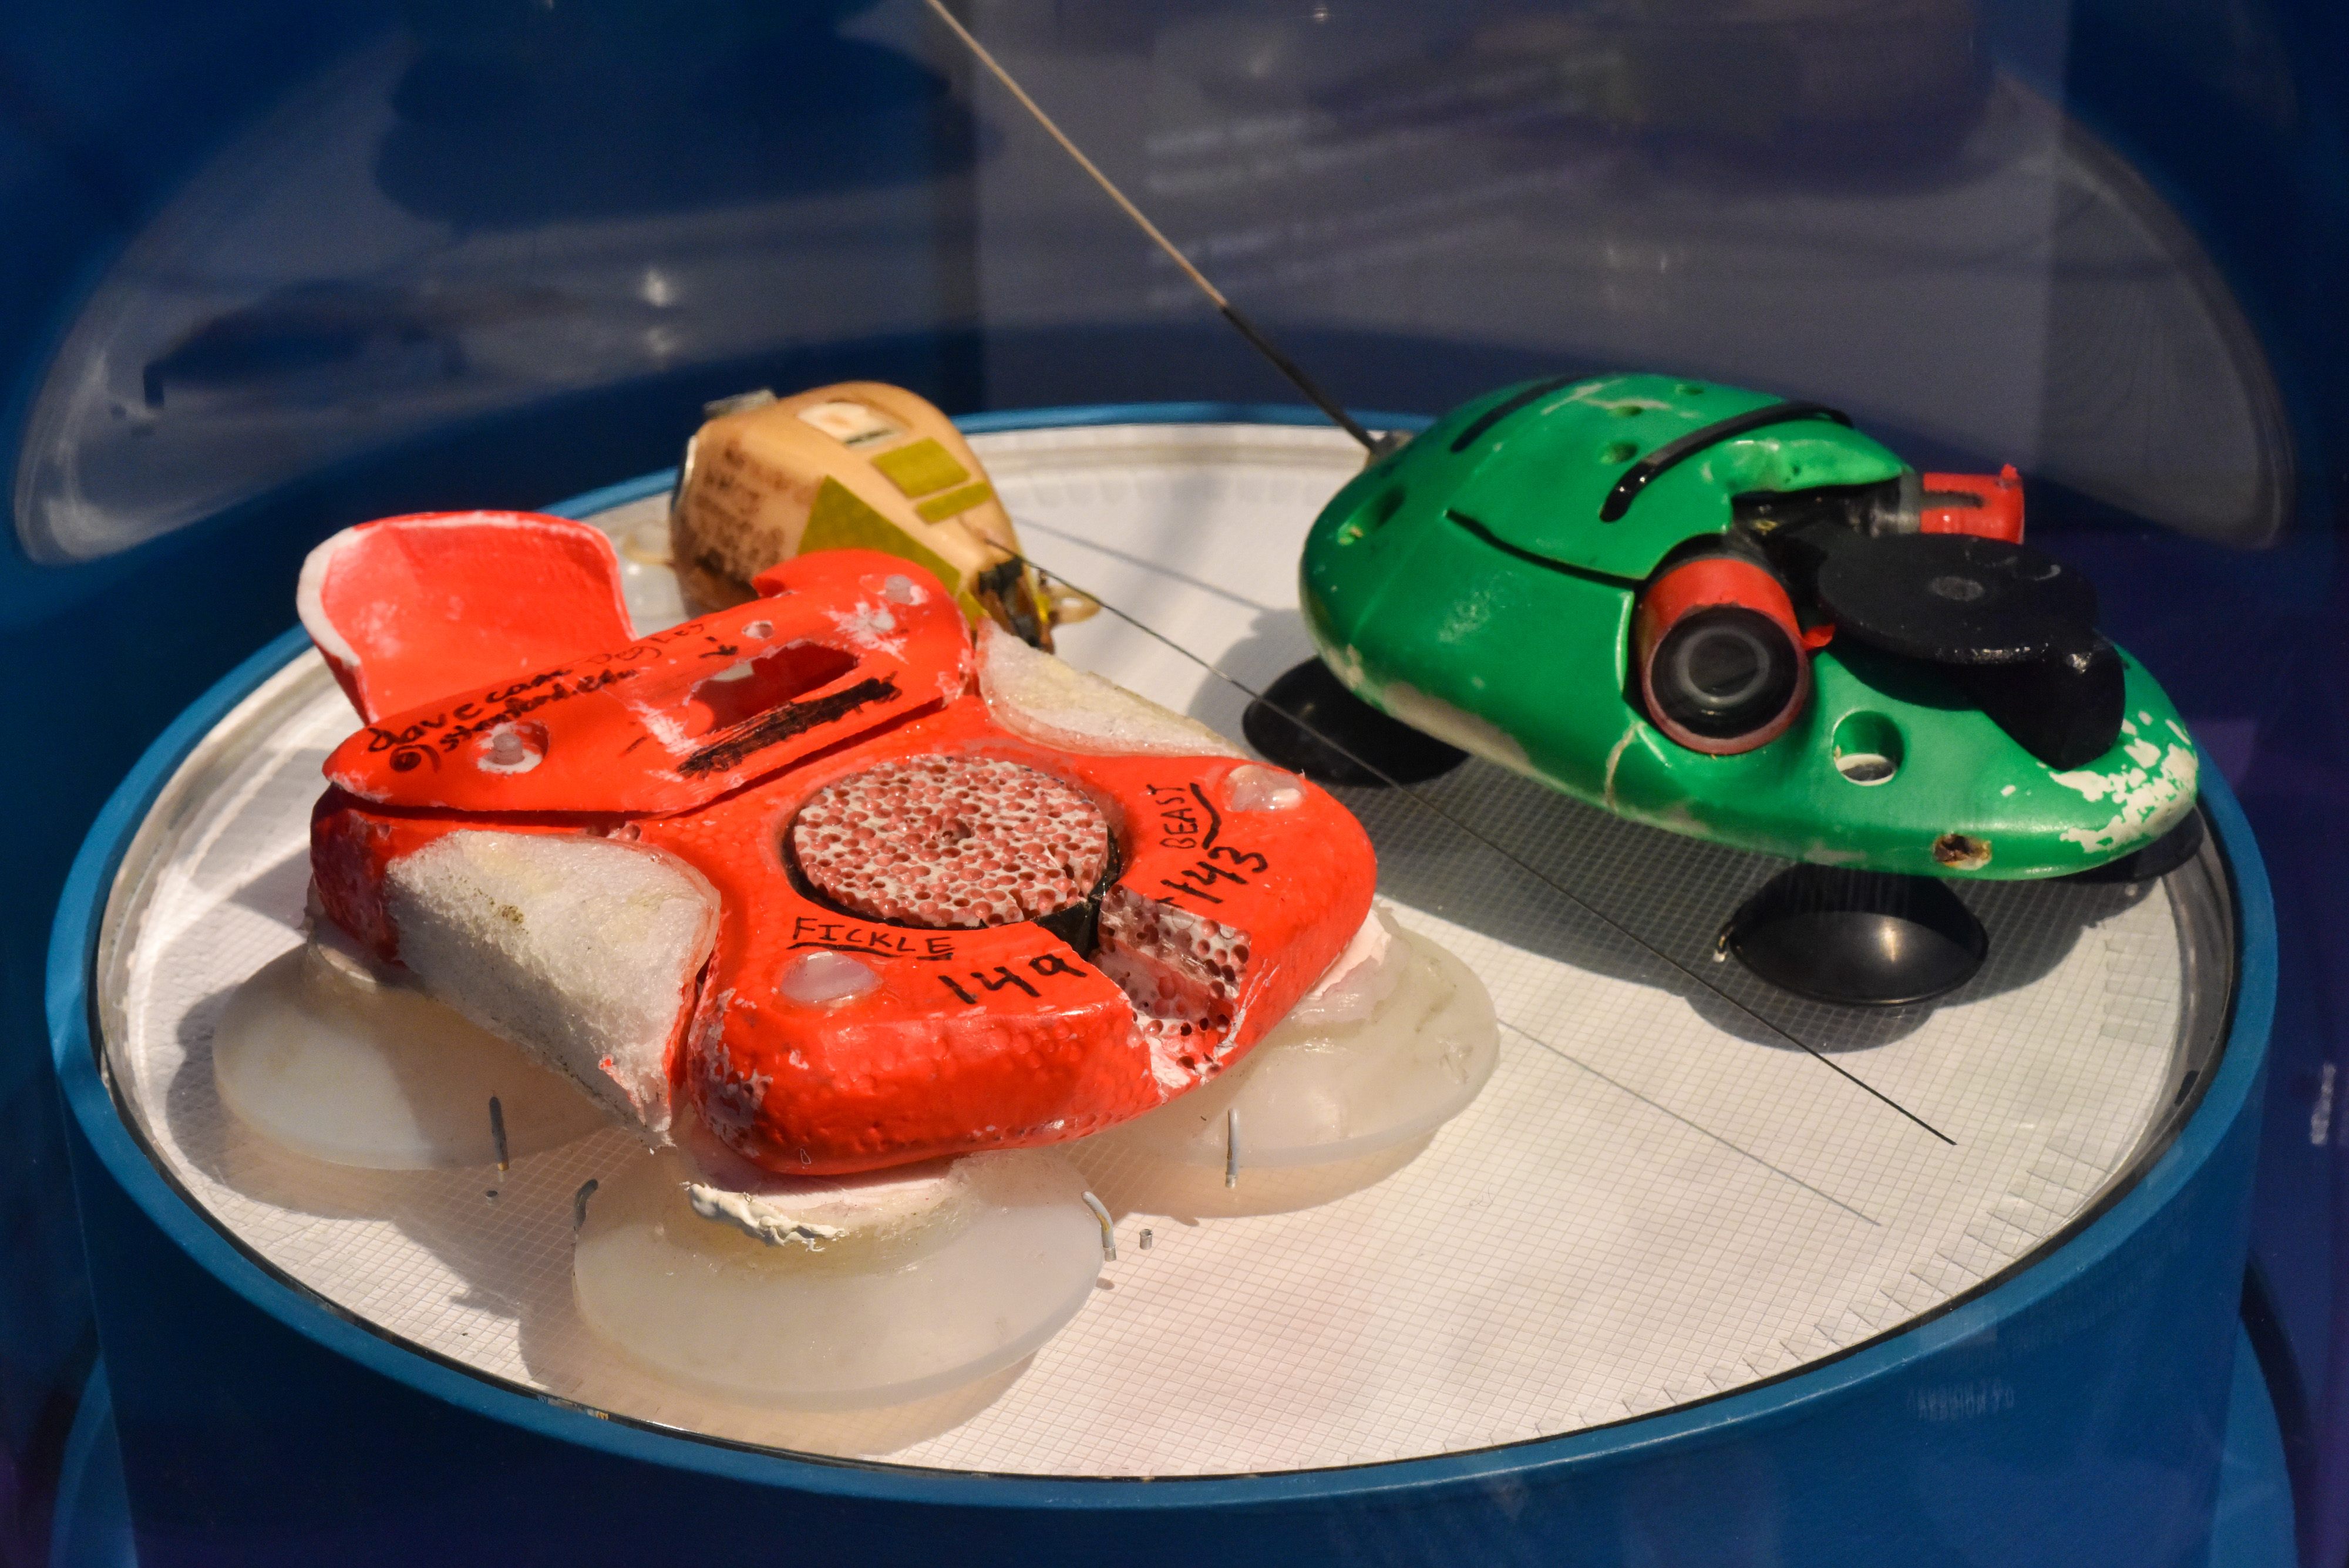 DIY Robot Hand - Buffalo Museum of Science